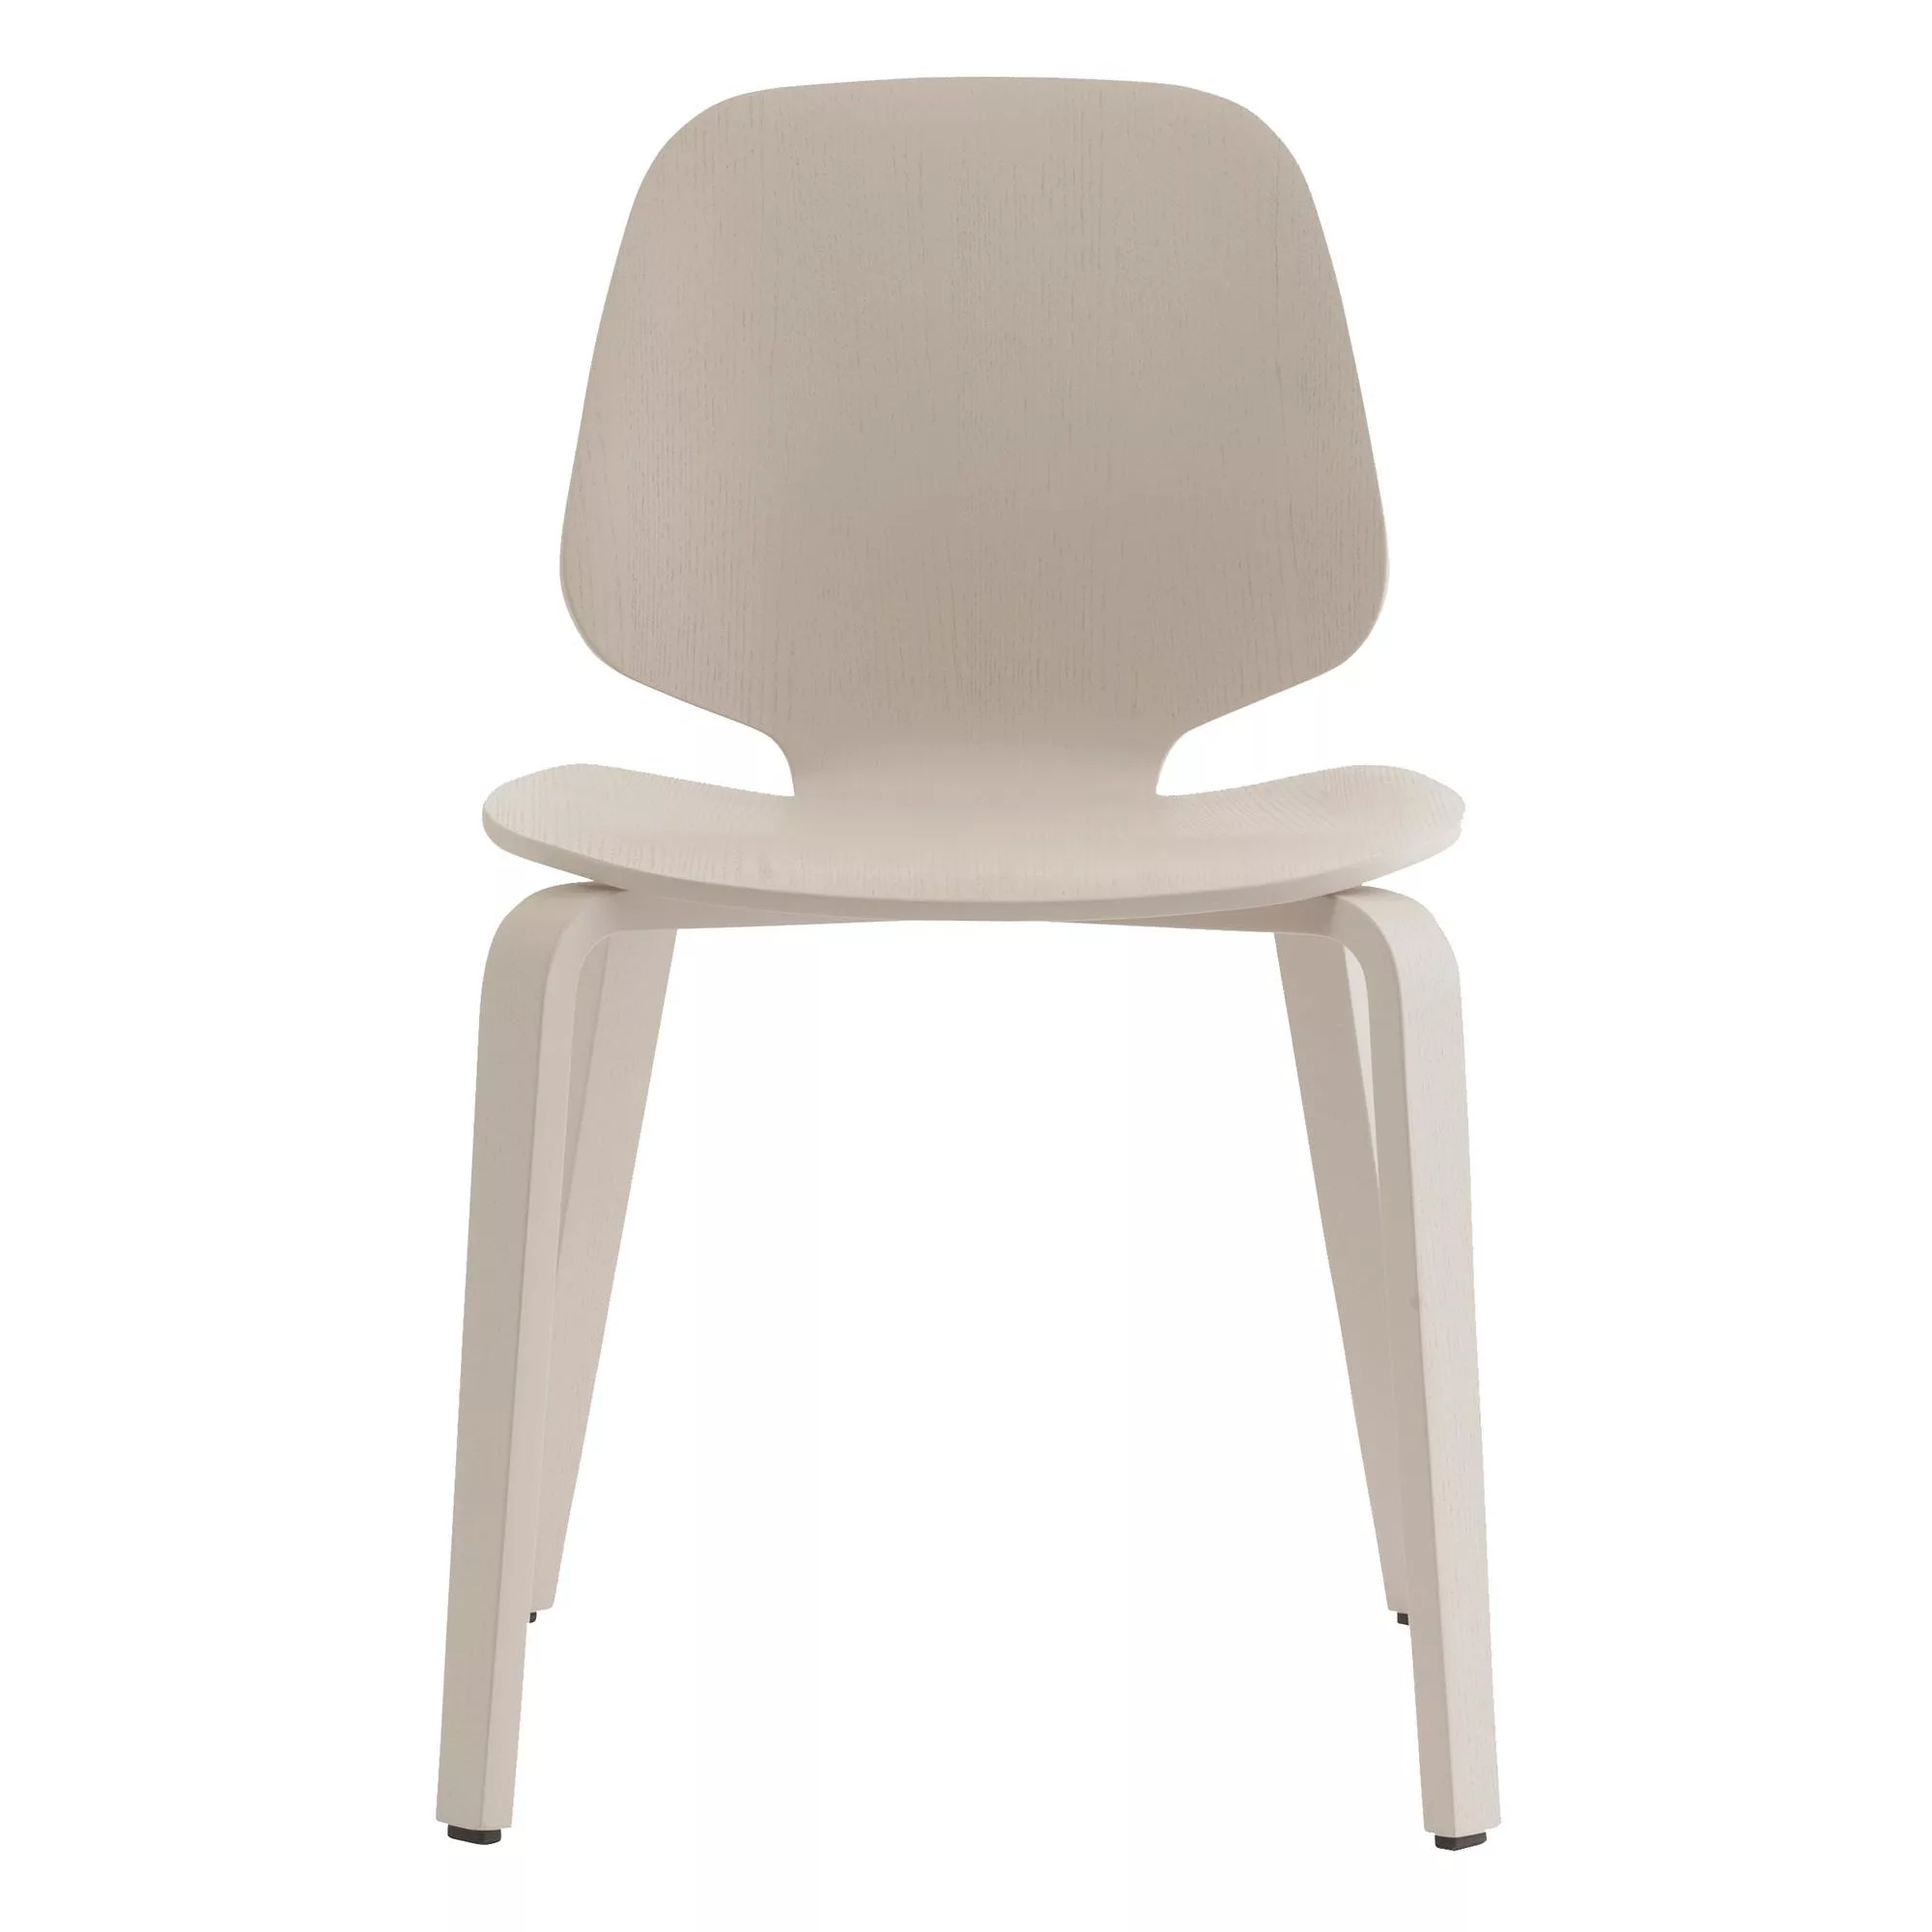 Normann Copenhagen - My Chair Stuhl - auster/Esche lackiert/BxHxT 48x80x50c günstig online kaufen